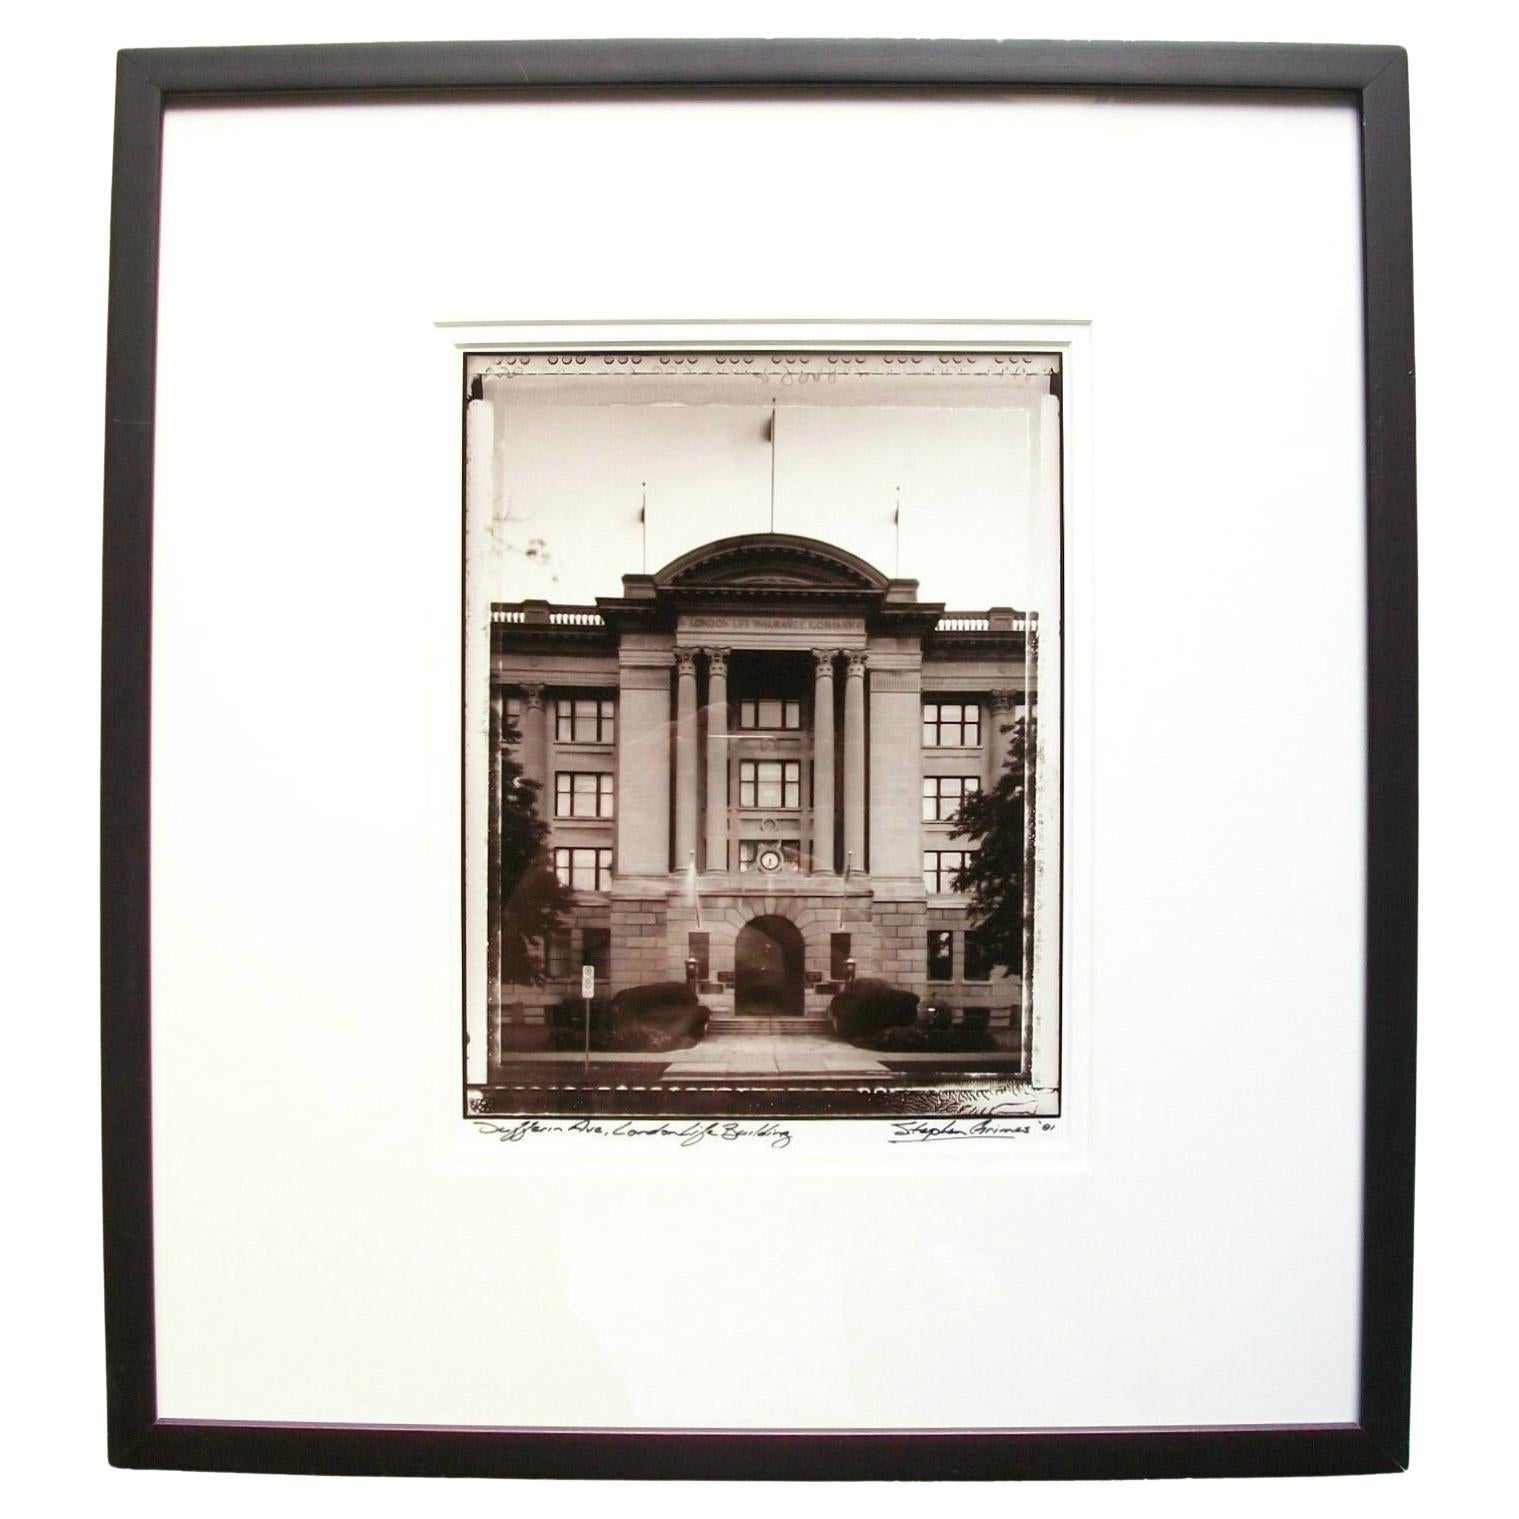 STEPHEN GRIMES - 'London Life Building' - Vintage Photograph - Signed - C. 1981 For Sale